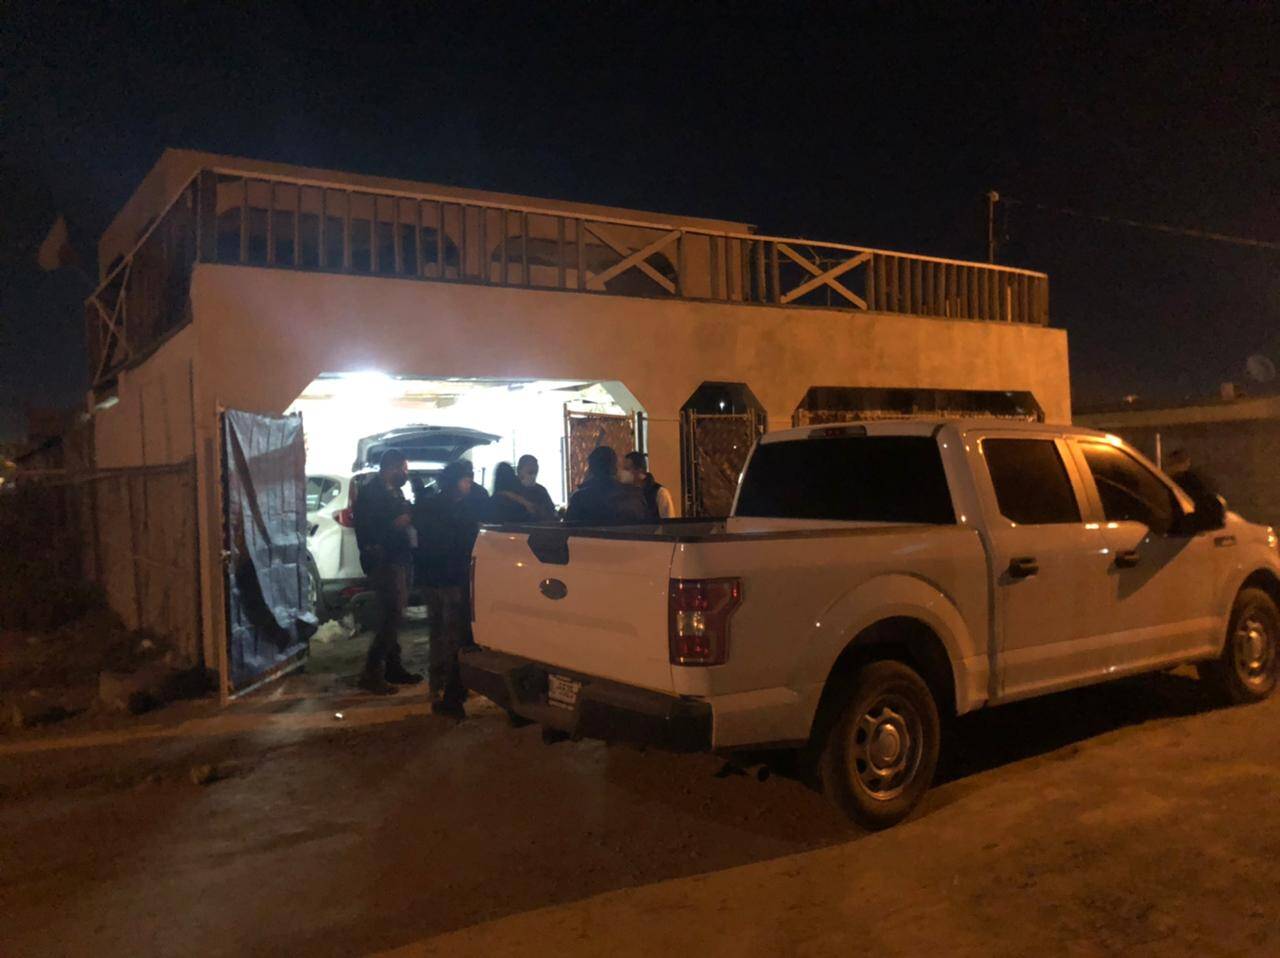 Descubren droga, balas y autos robados en casa del Valle de Mexicali